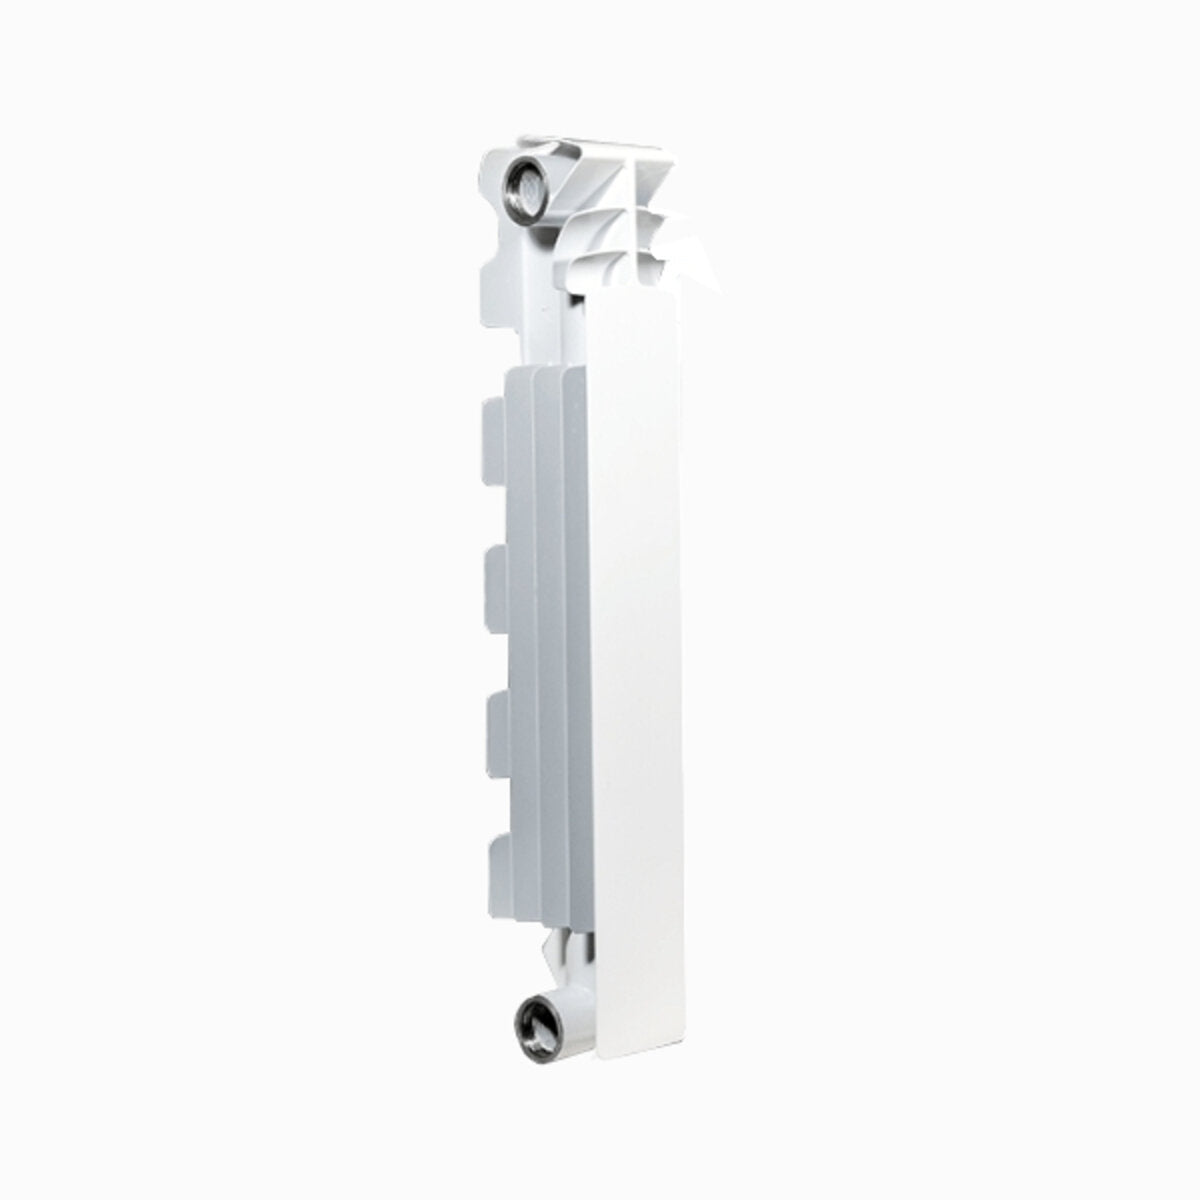 Fondital radiator in die-cast aluminum Exclusivo B3 single element center distance 700 mm